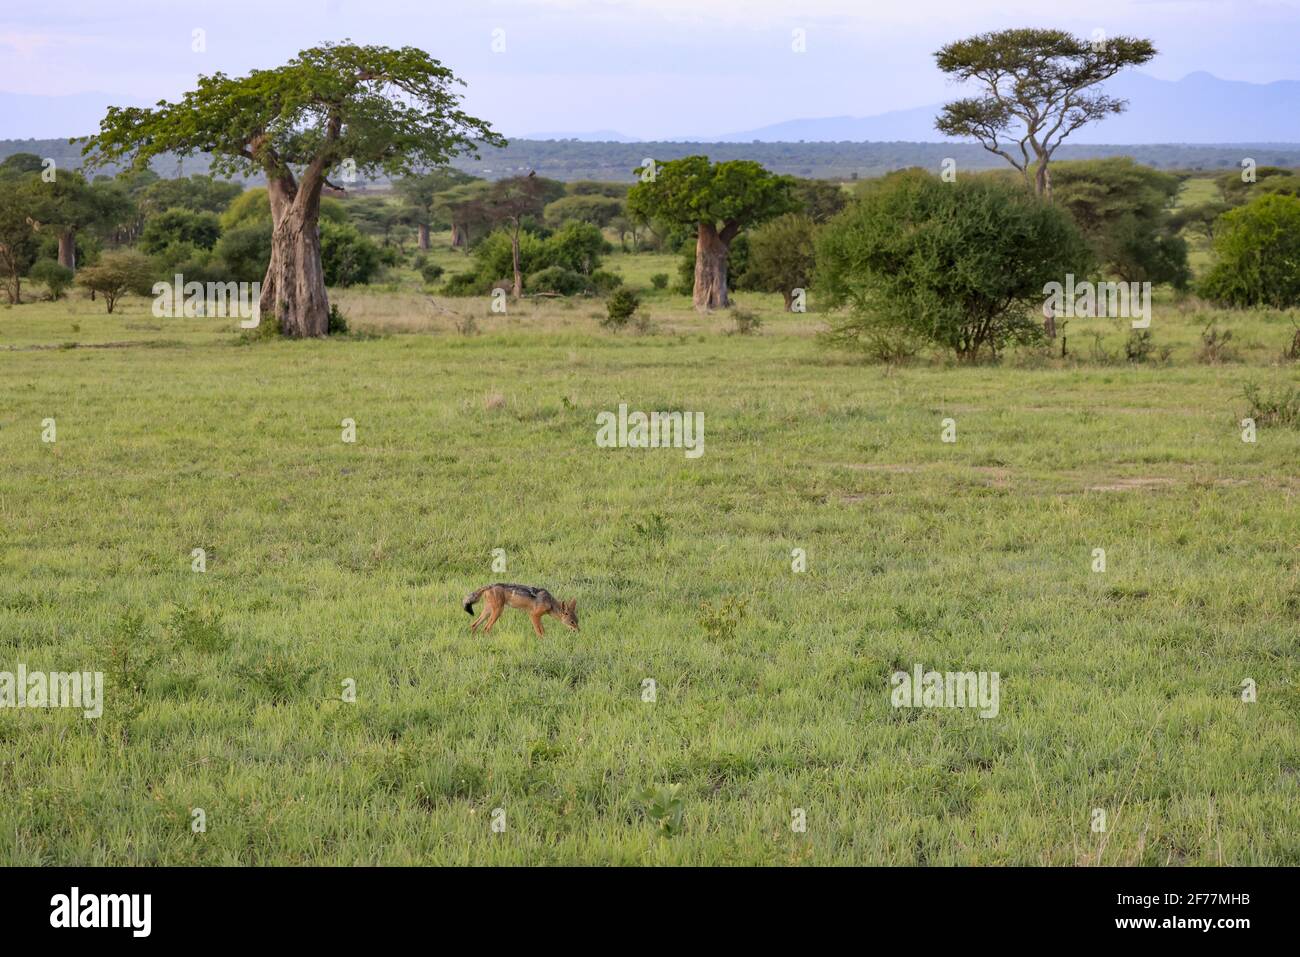 Tanzania, WMA (wildlife managment area) of Randilen, Monduli district, Arusha region, A black-backed jackal (Canis mesomelas) in the savannah, baobabs in the background Stock Photo